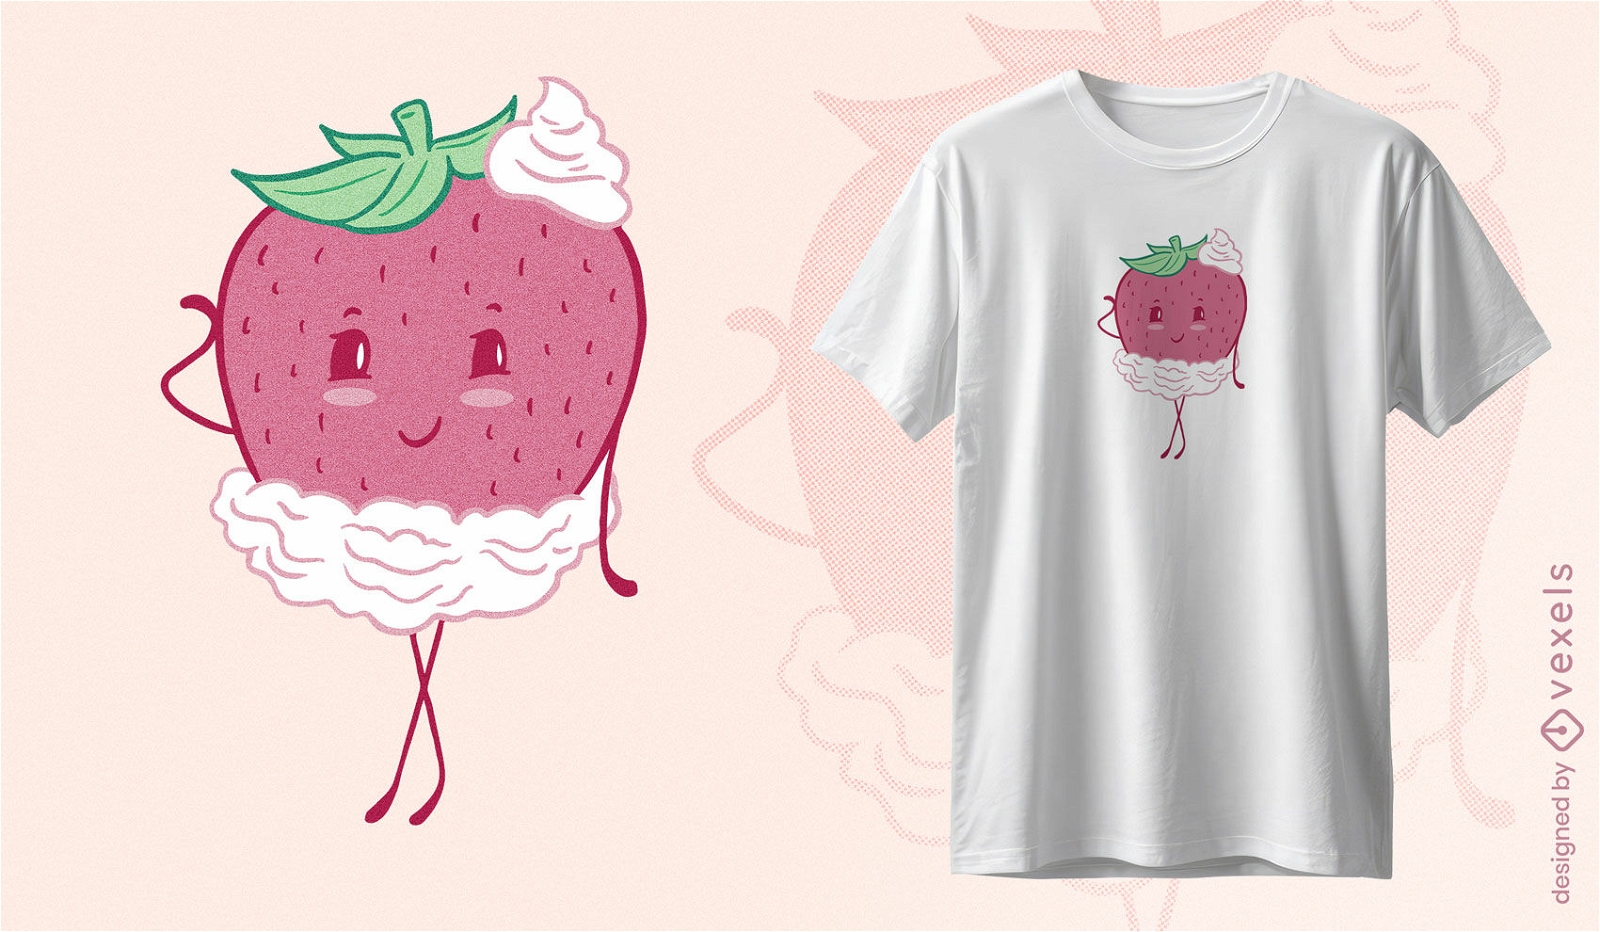 Erdbeere mit cremefarbenem T-Shirt-Design